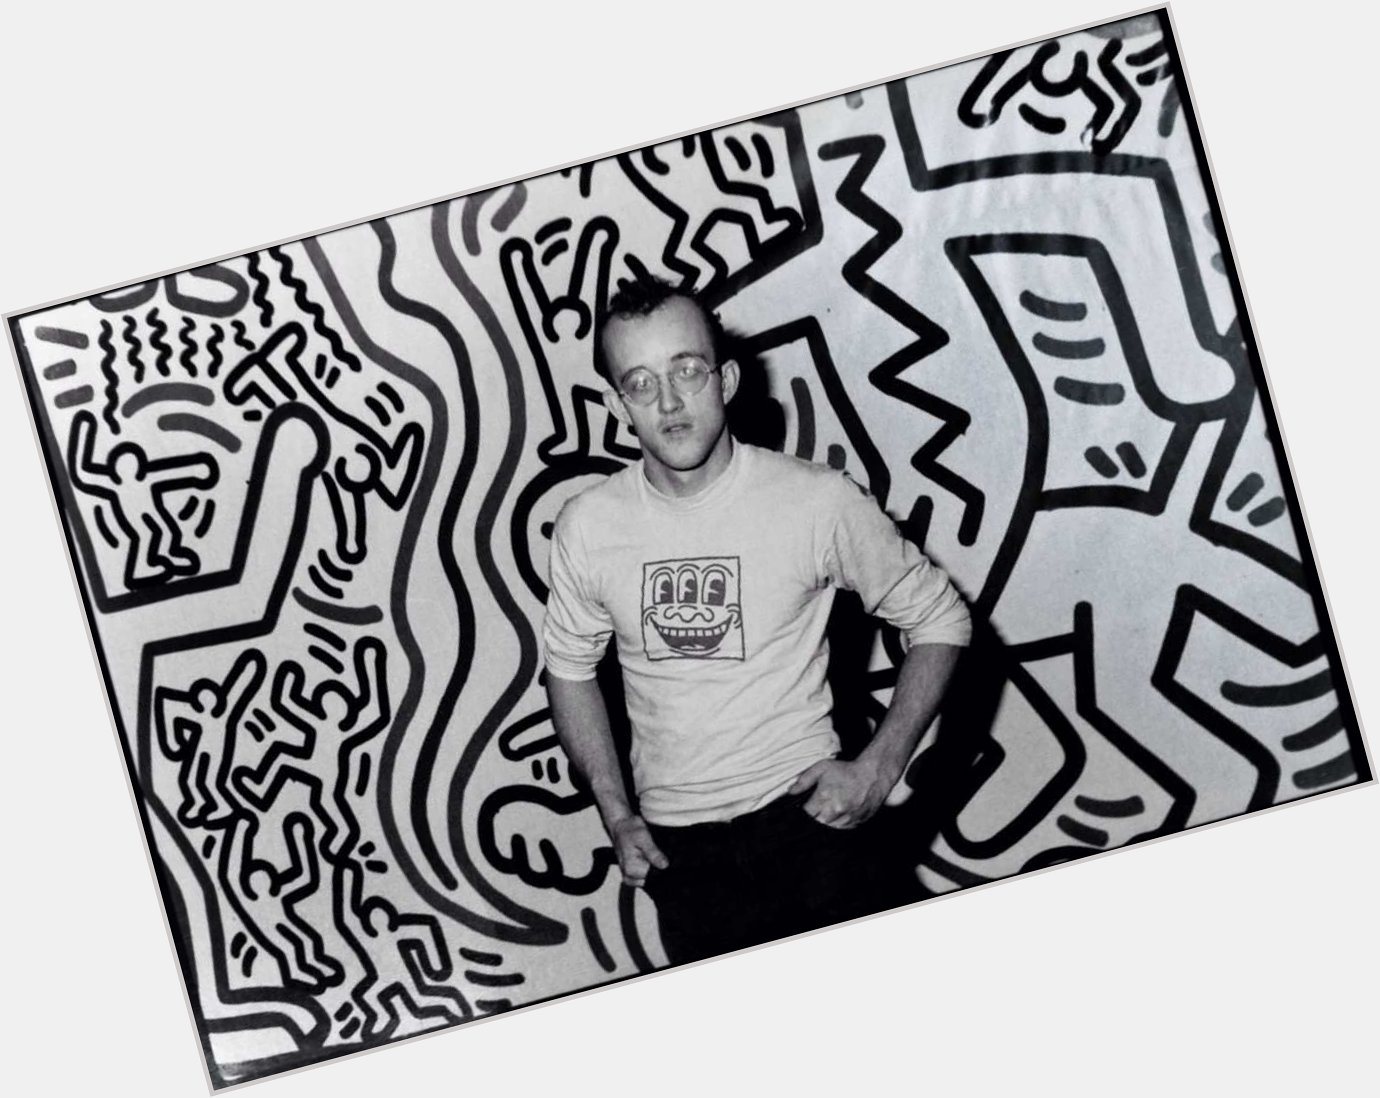 Happy birthday to the patron saint of my wip s mc, Keith Haring 